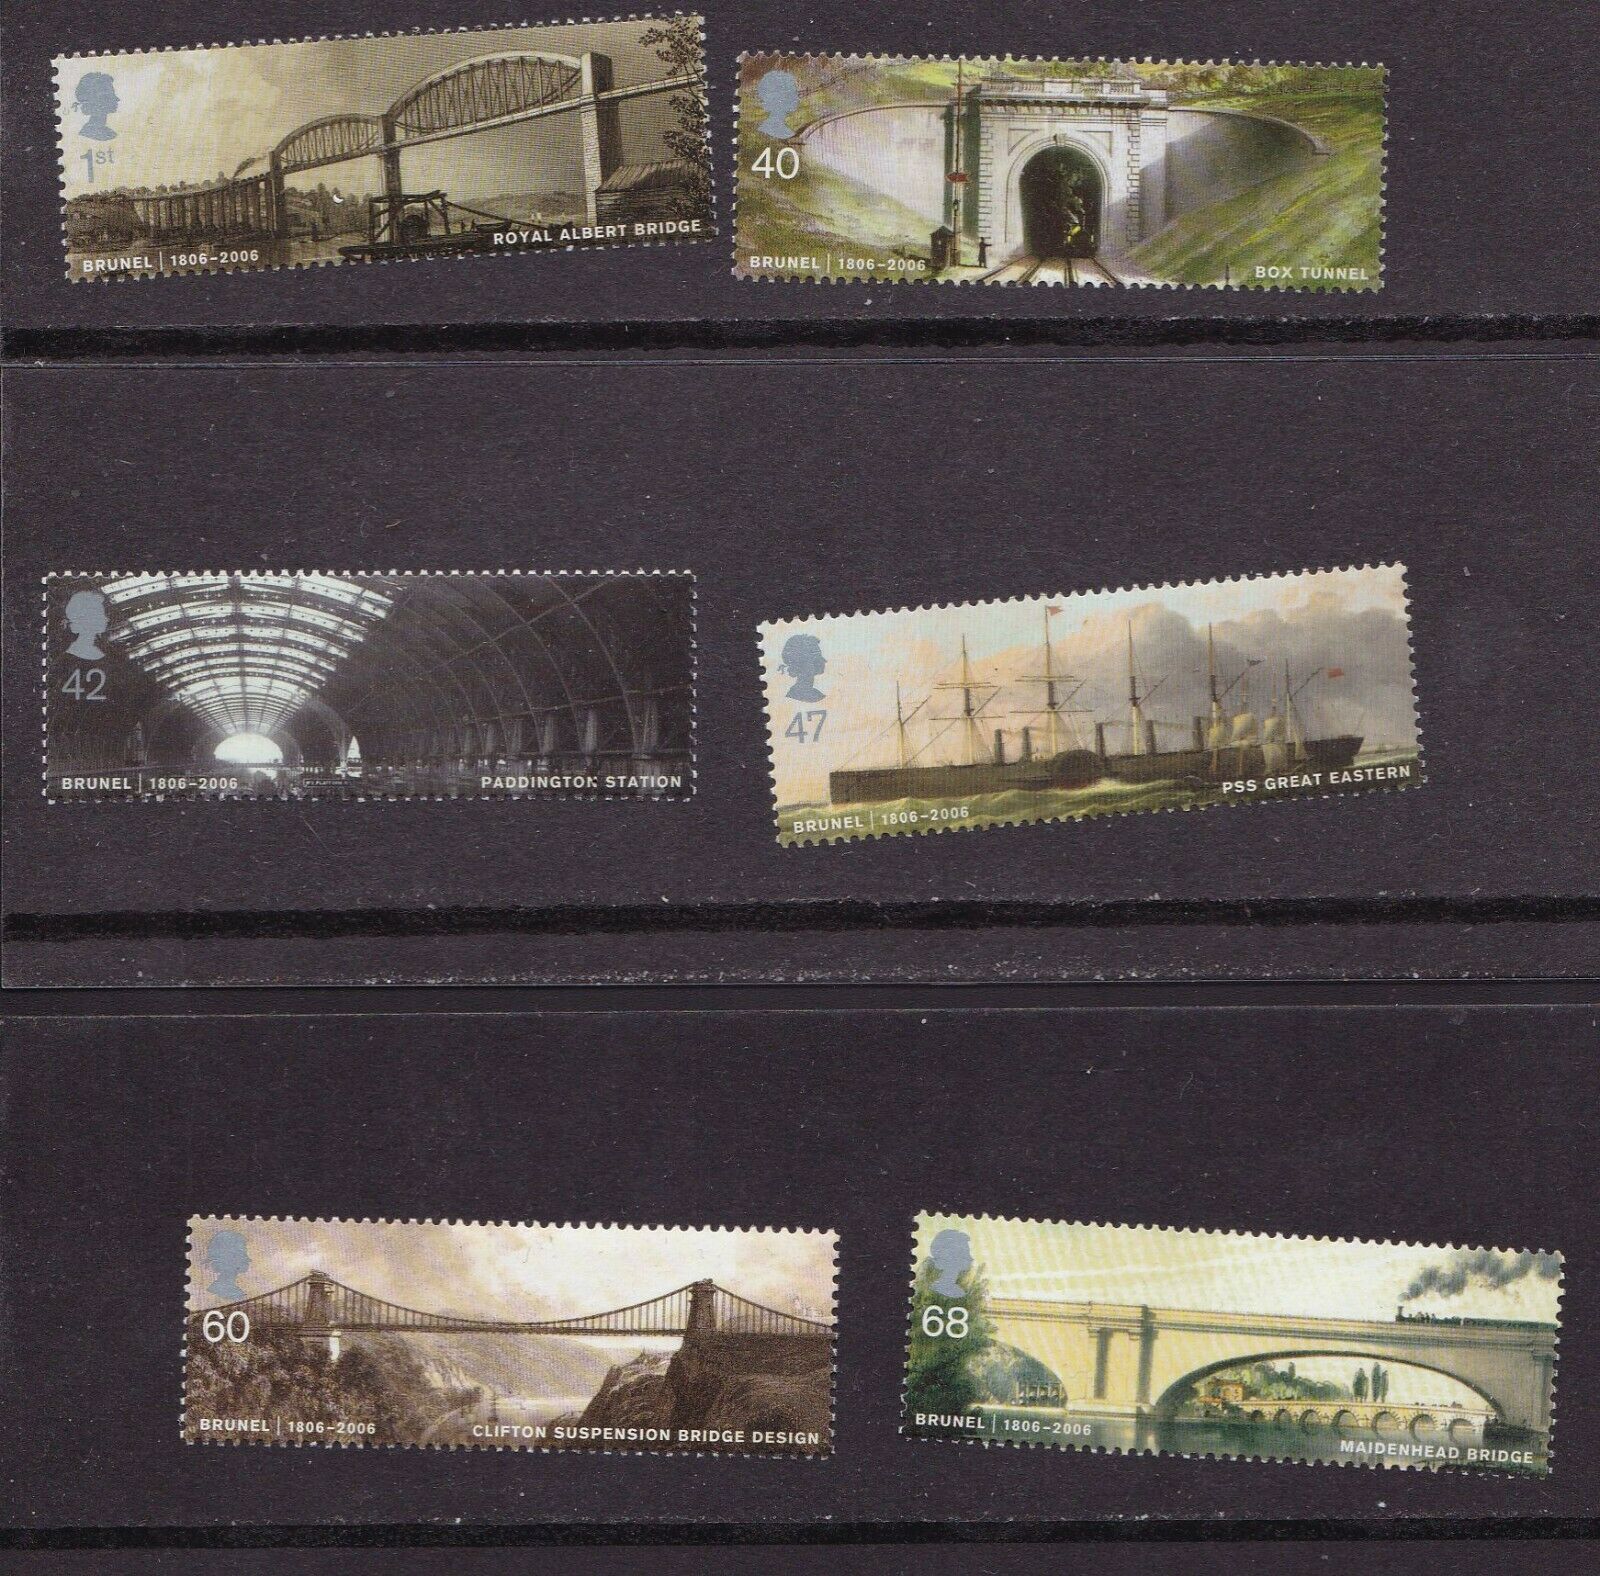 2006 200th Anniversary Of Engineer Isambard Kingdom Brunel Gb Uk Stamp Set Mh